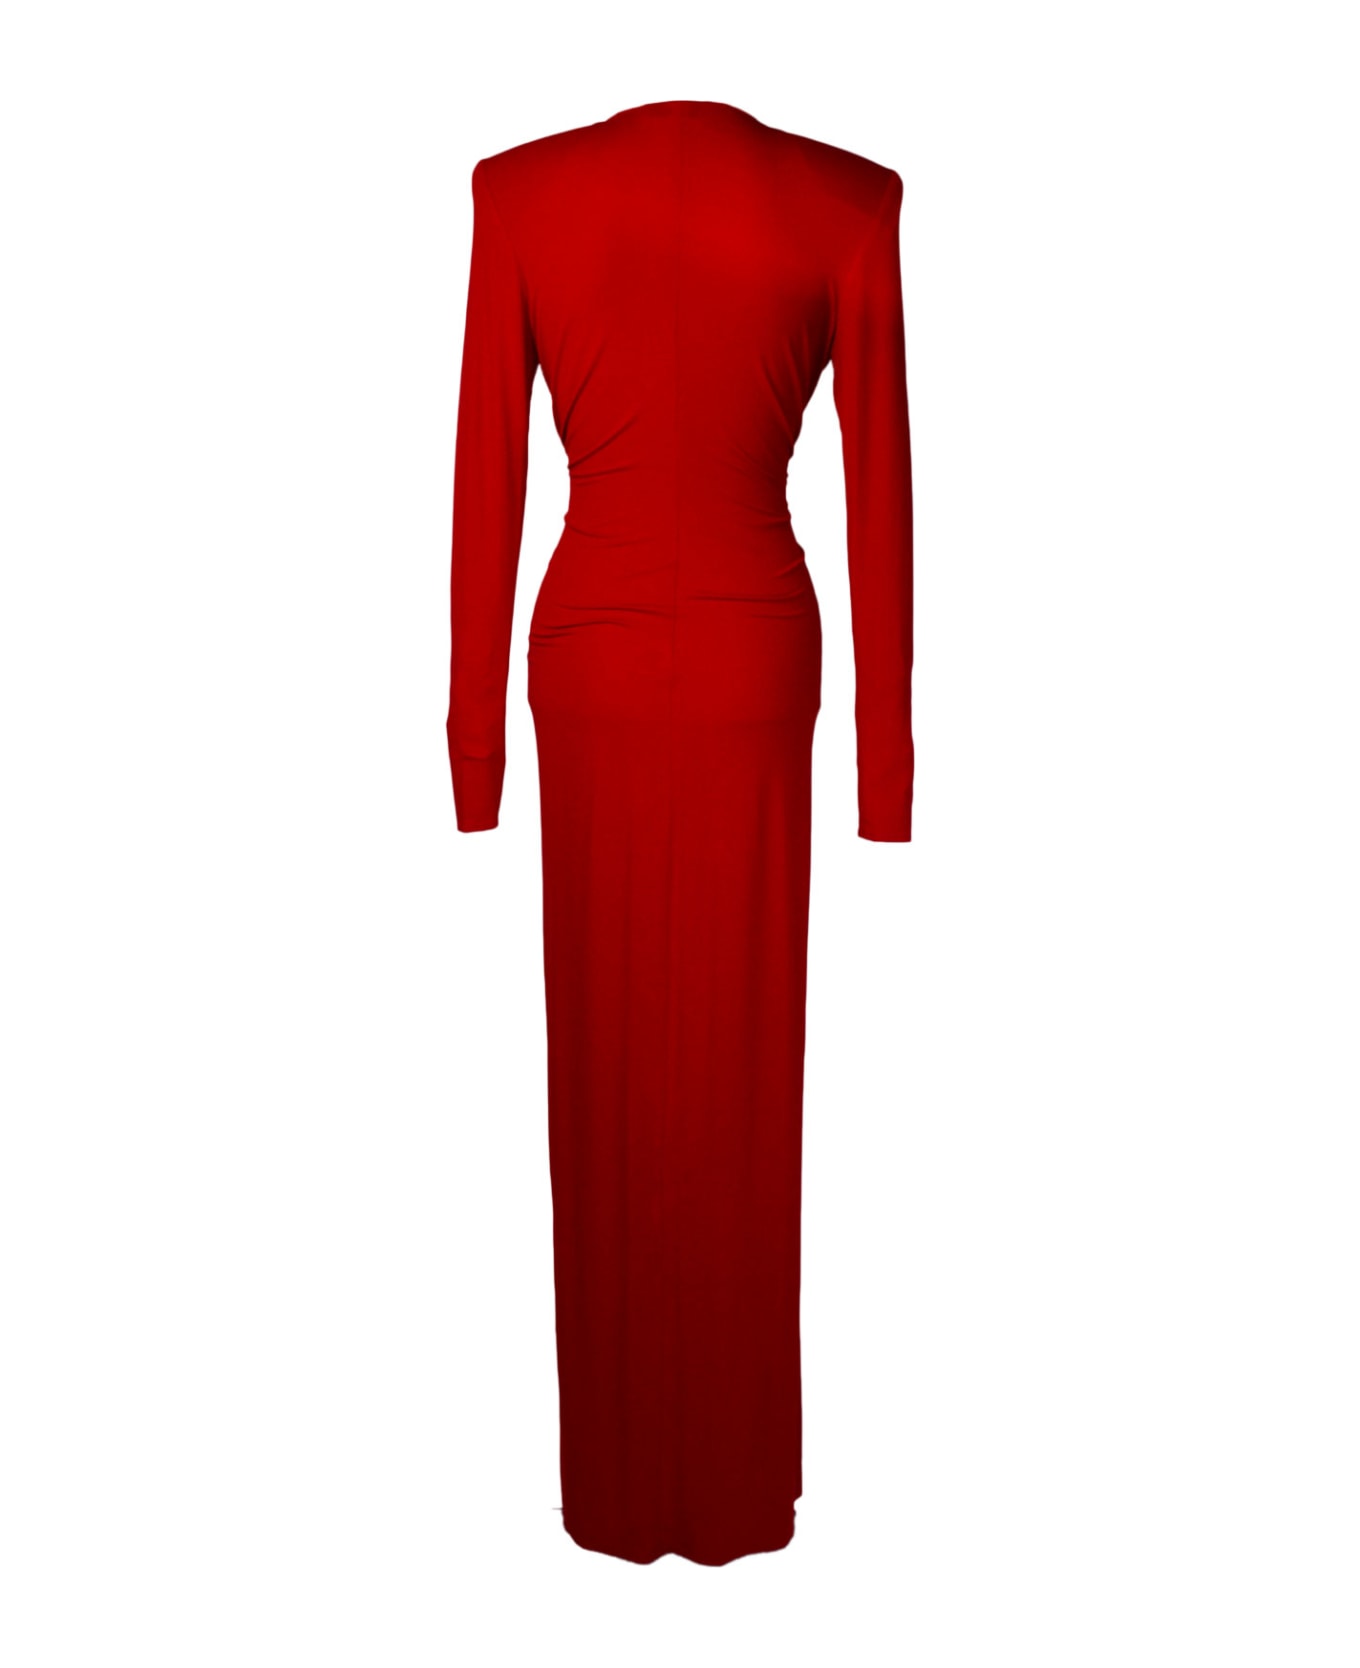 Alexandre Vauthier Dress - Daring Red